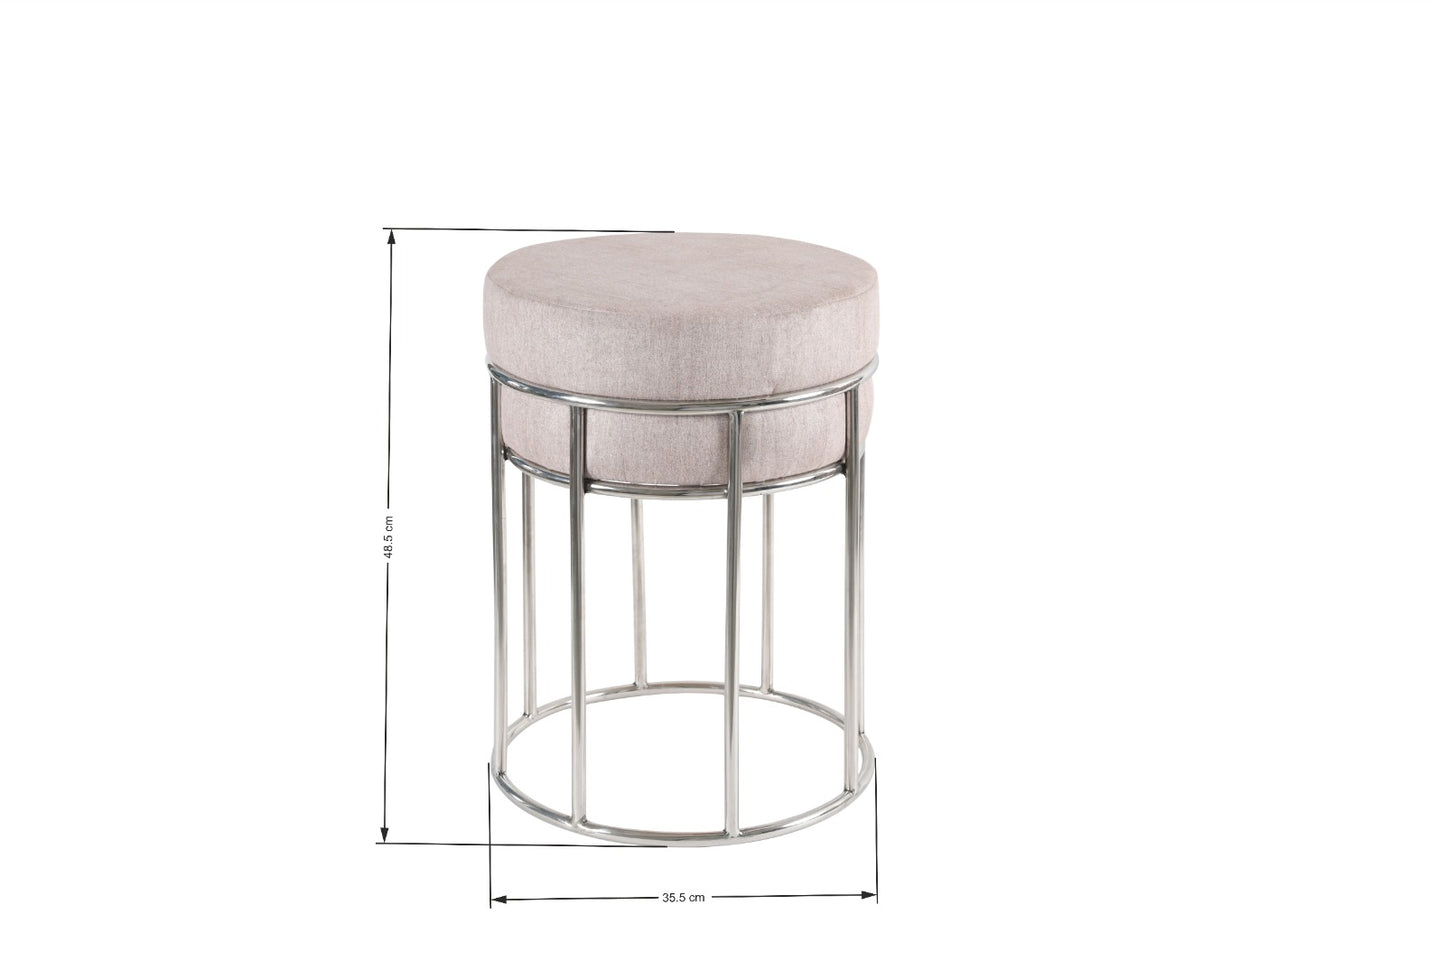 Minimalist Round Ottomon|Furniture by Sam Home Collection